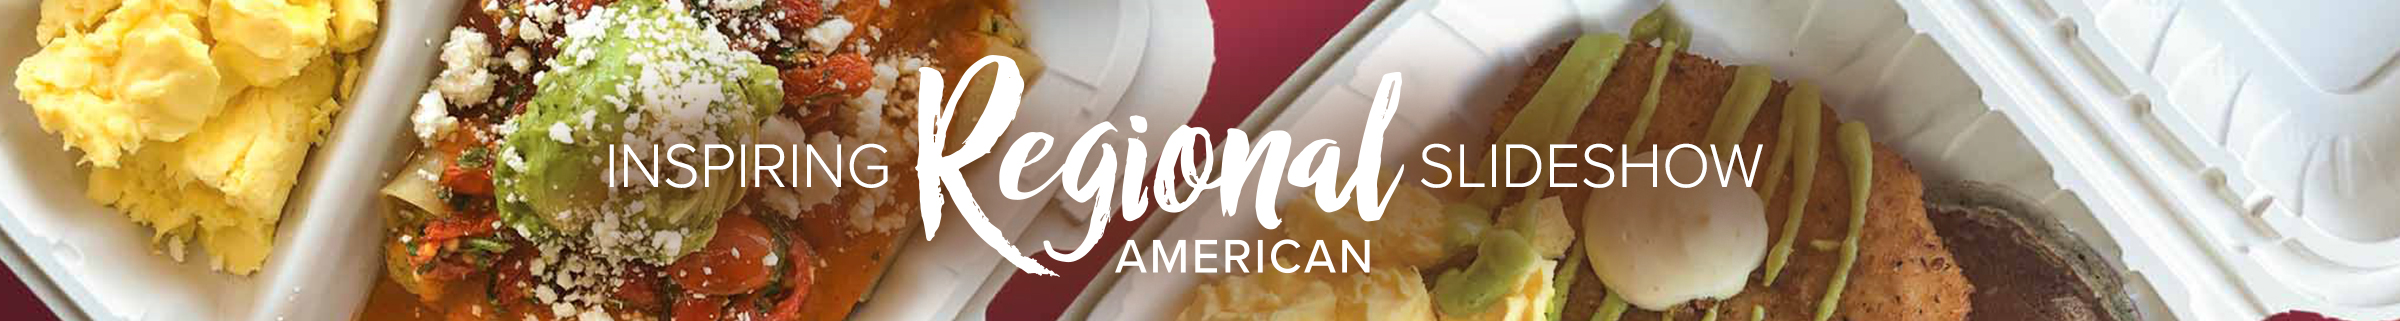 Inspiring Regional American slideshow